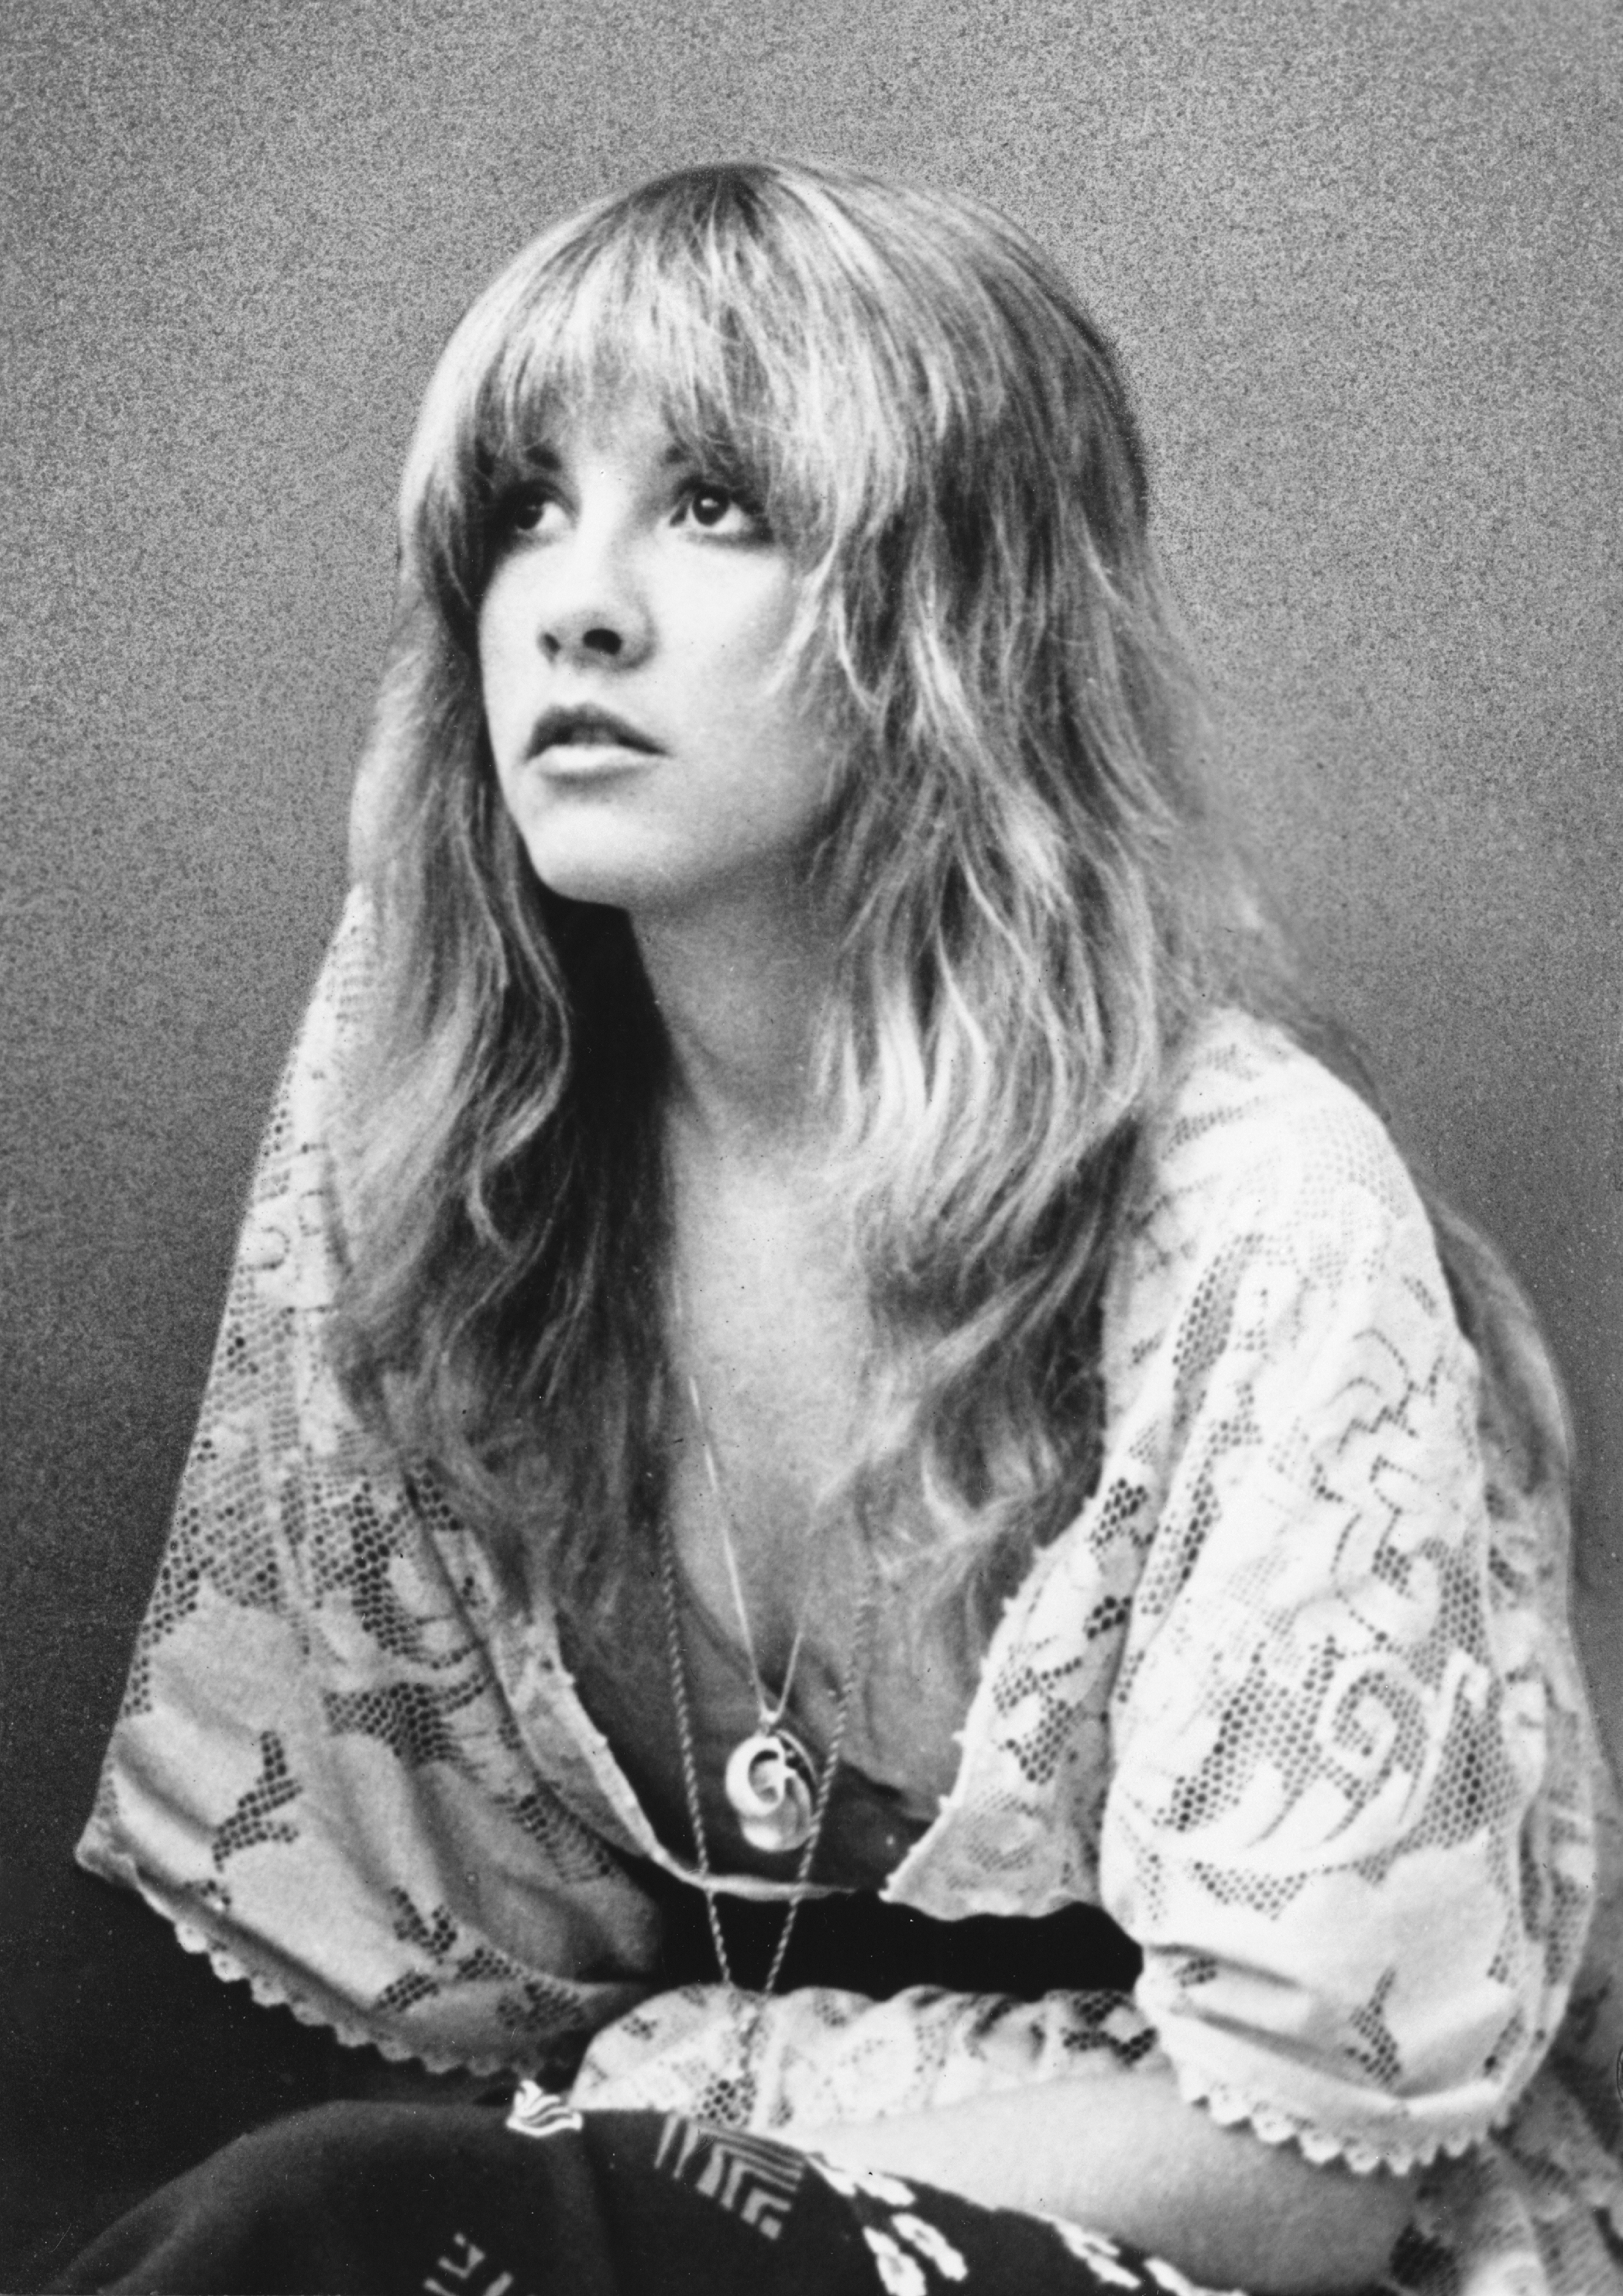 CIRCA 1976:  Singer Stevie Nicks poses for a portrait in circa 1976. 